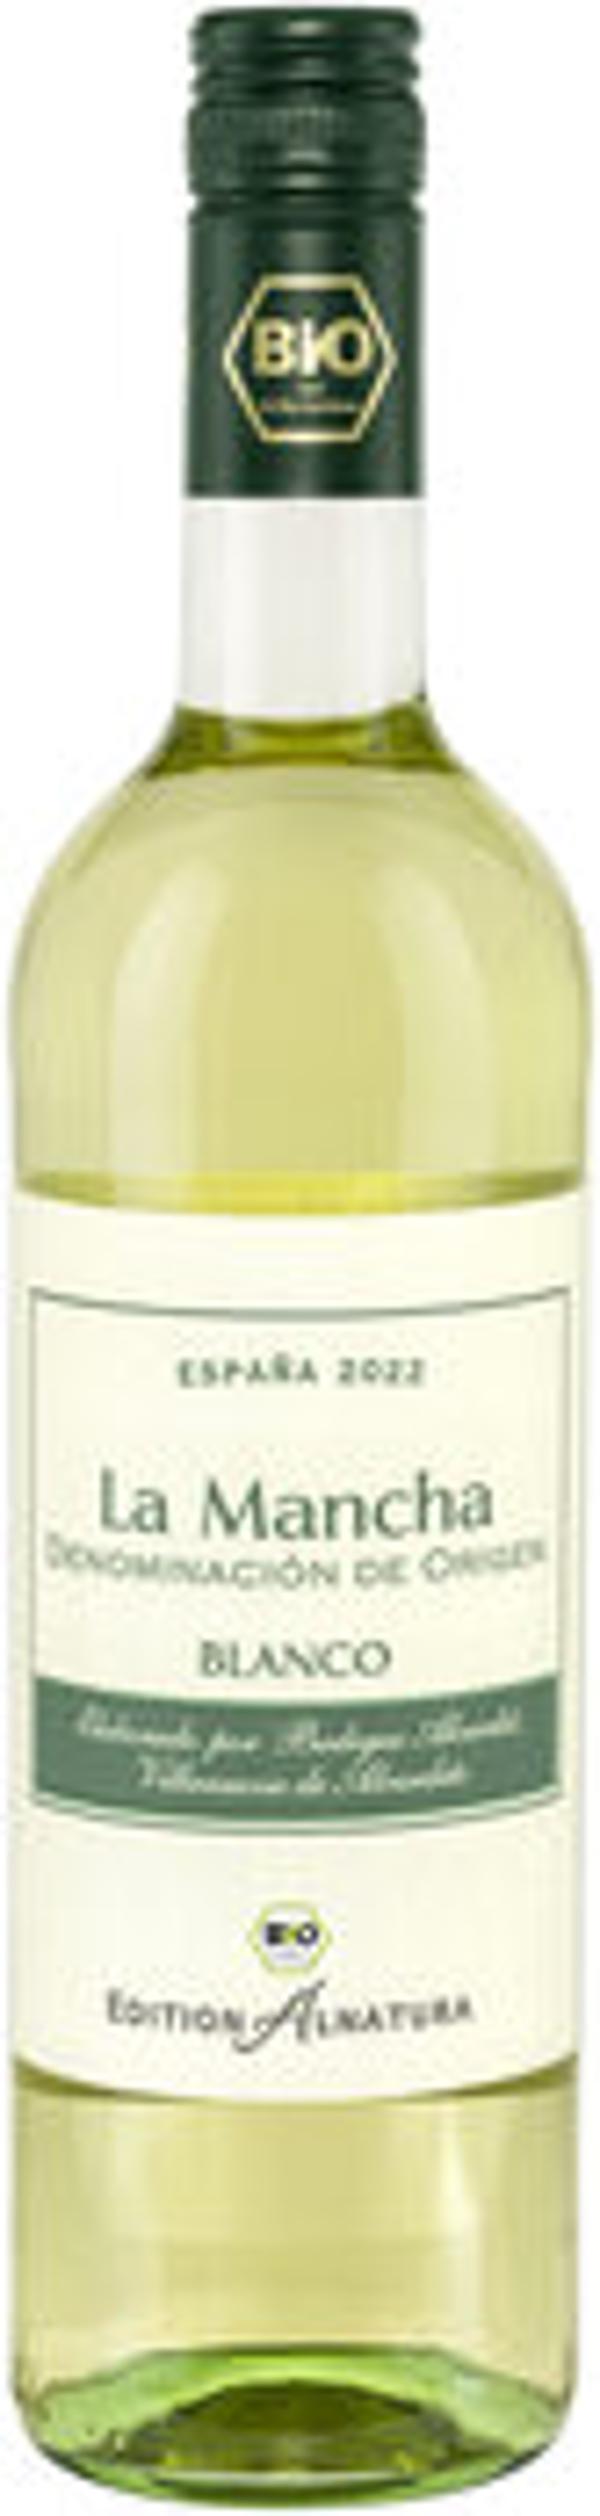 Produktfoto zu La Mancha Blanco 0,75L